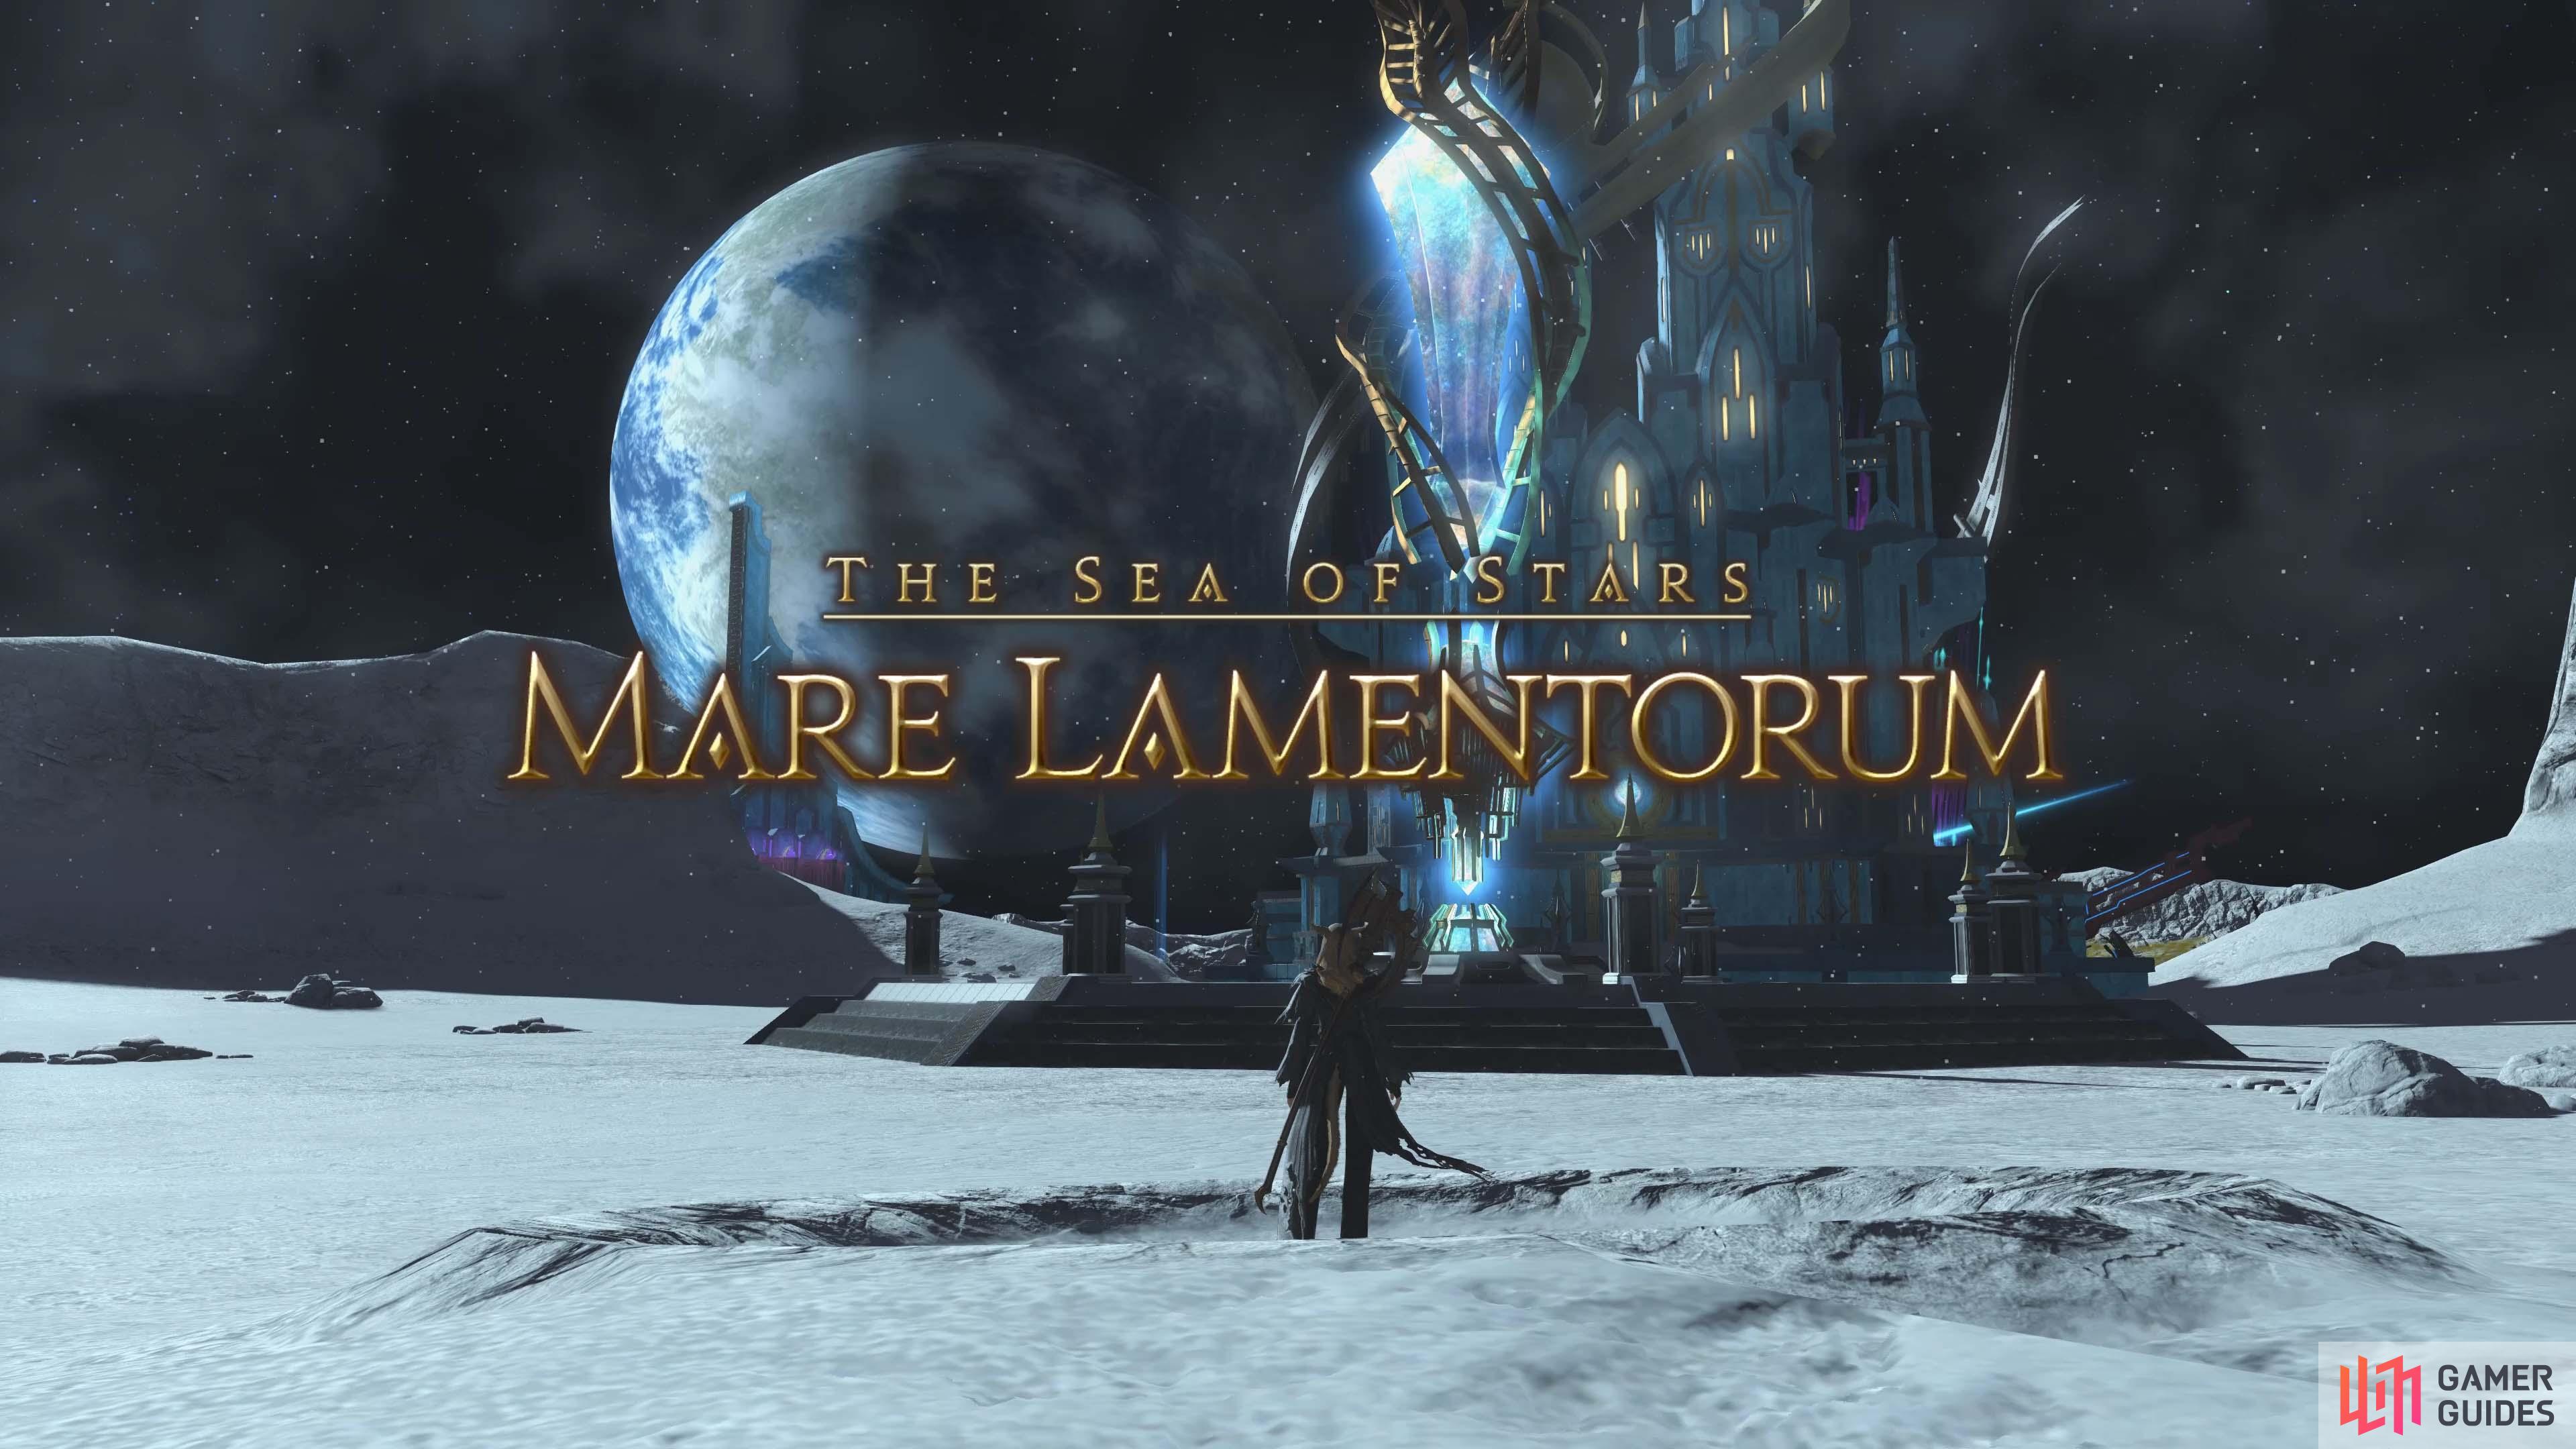 Welcome to Mare Lamentorum